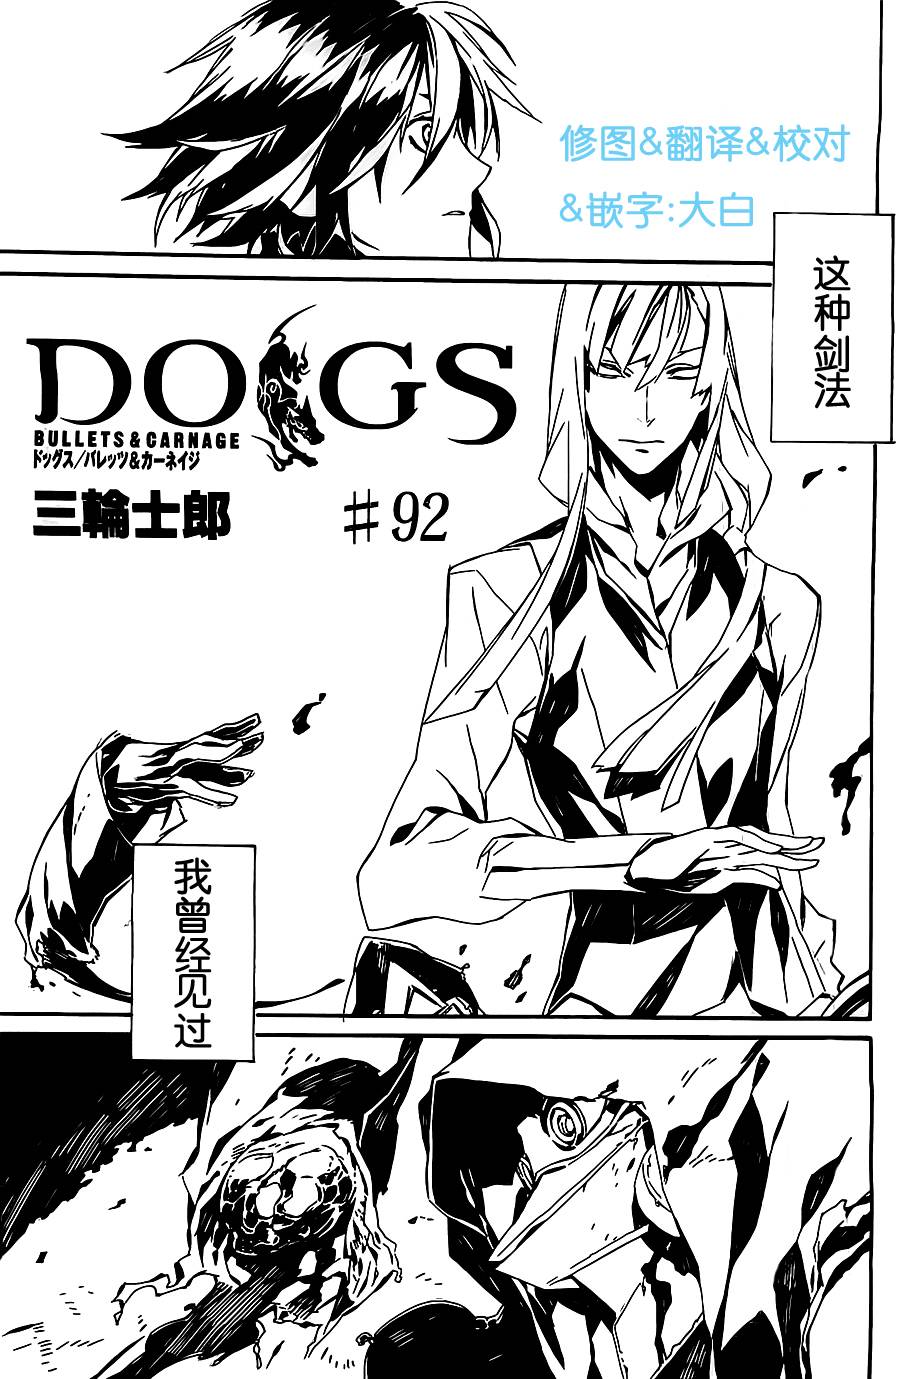 Dogs 第92話 漫畫線上看 動漫戲說 Acgn Cc